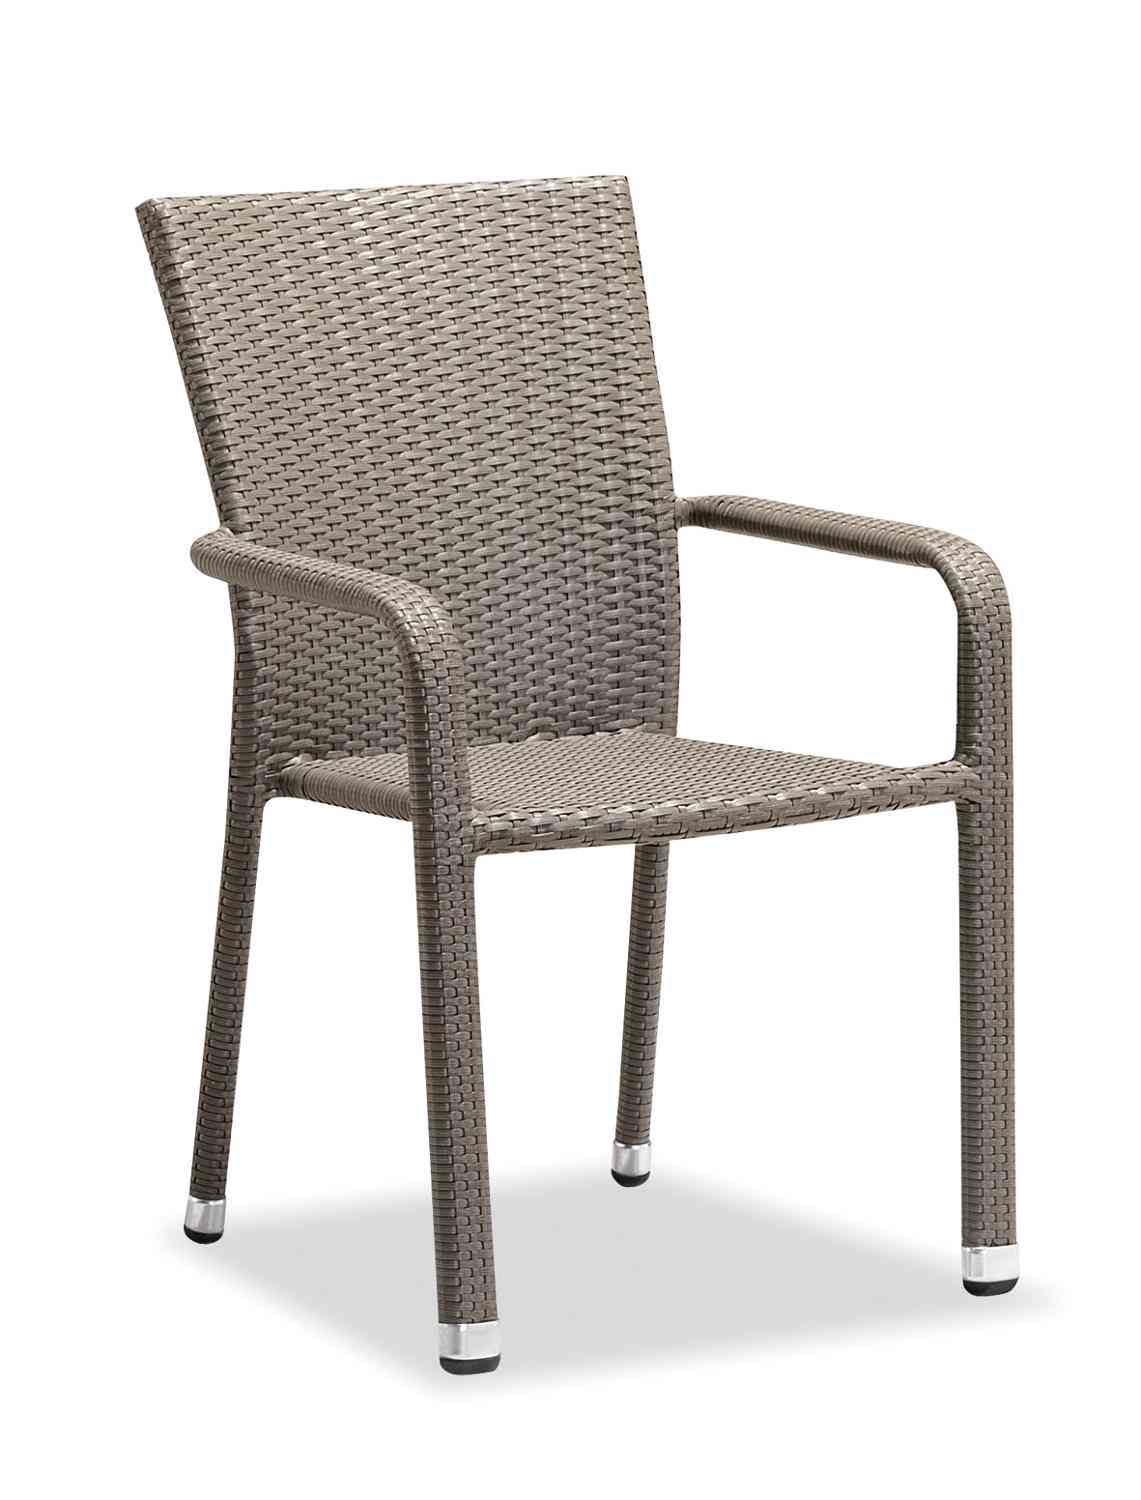 Outdoor Chairs With Armrest Rattan Wicker Garden Furniture